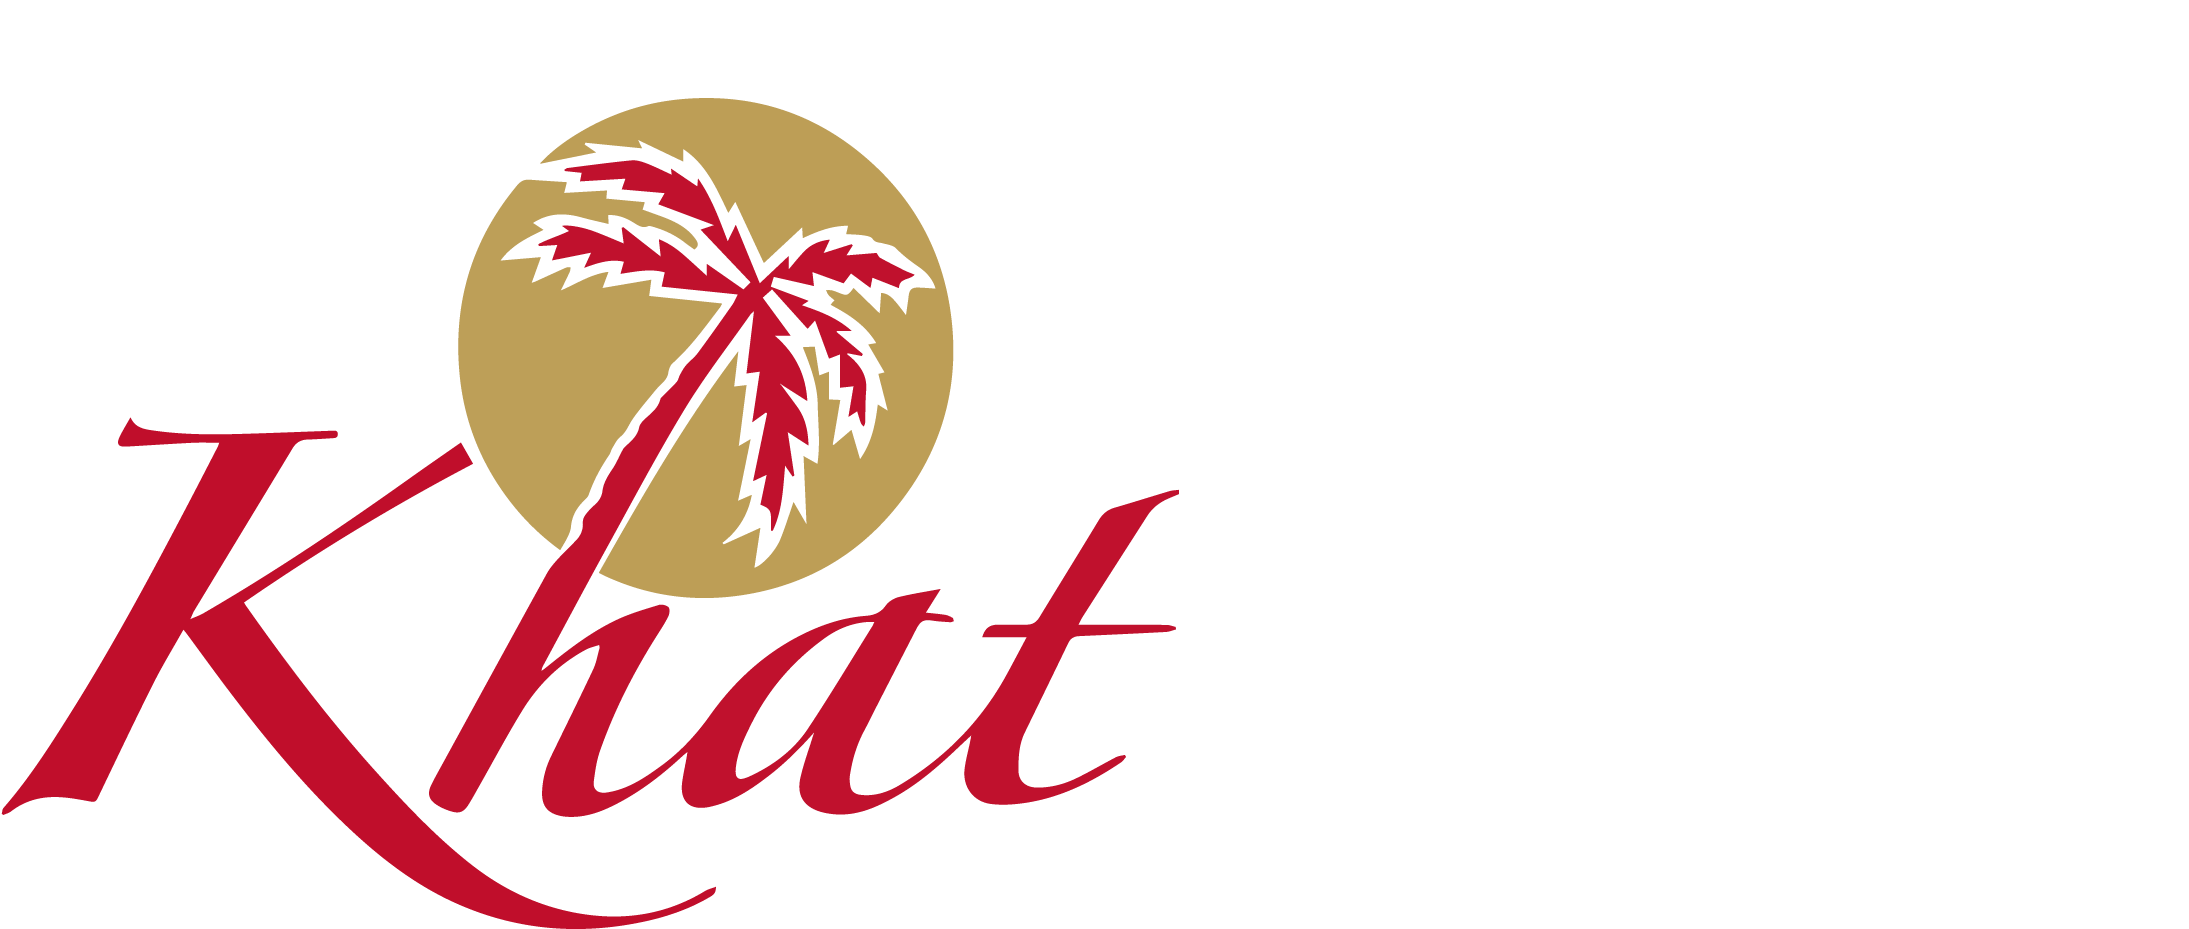 Khat Tourism (2300x989)